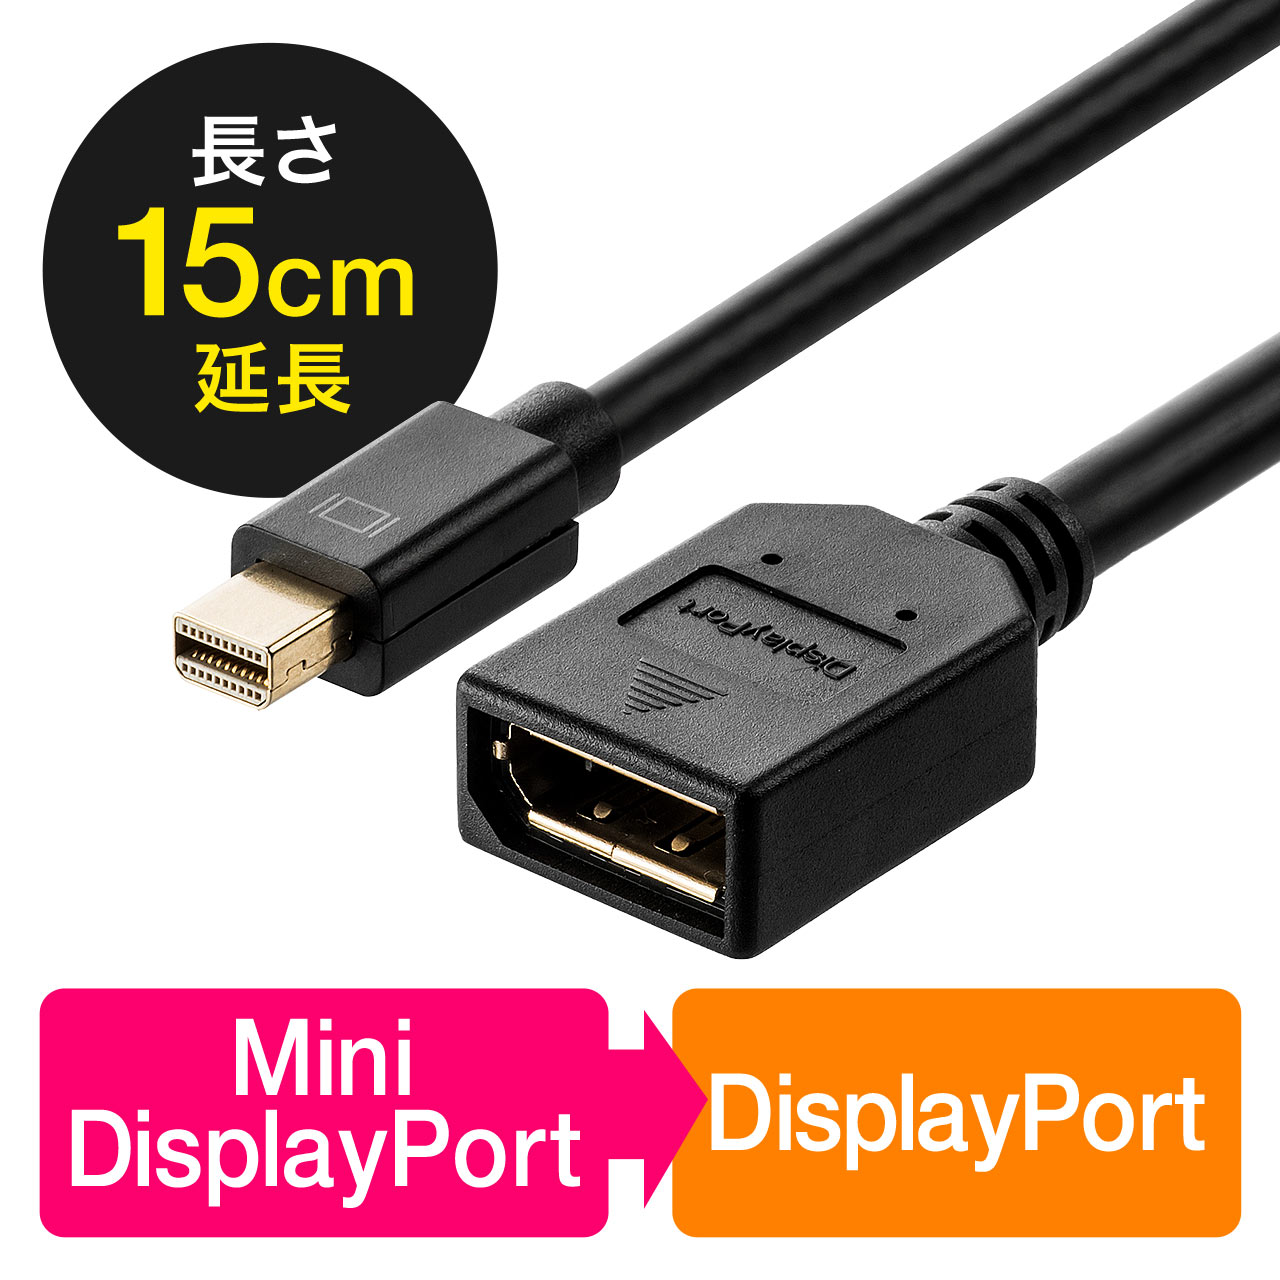  Mini DisplayPort HDMI 変換ケーブル miniDP to 変換アダプタ Thunderbolt Port HDMI アップル apple Mac用 MacBook Pro MacBook Air Macmini iMac MacPro 1920x1080 外部電源不要 ホワイト UL-CAAD001 送料無料